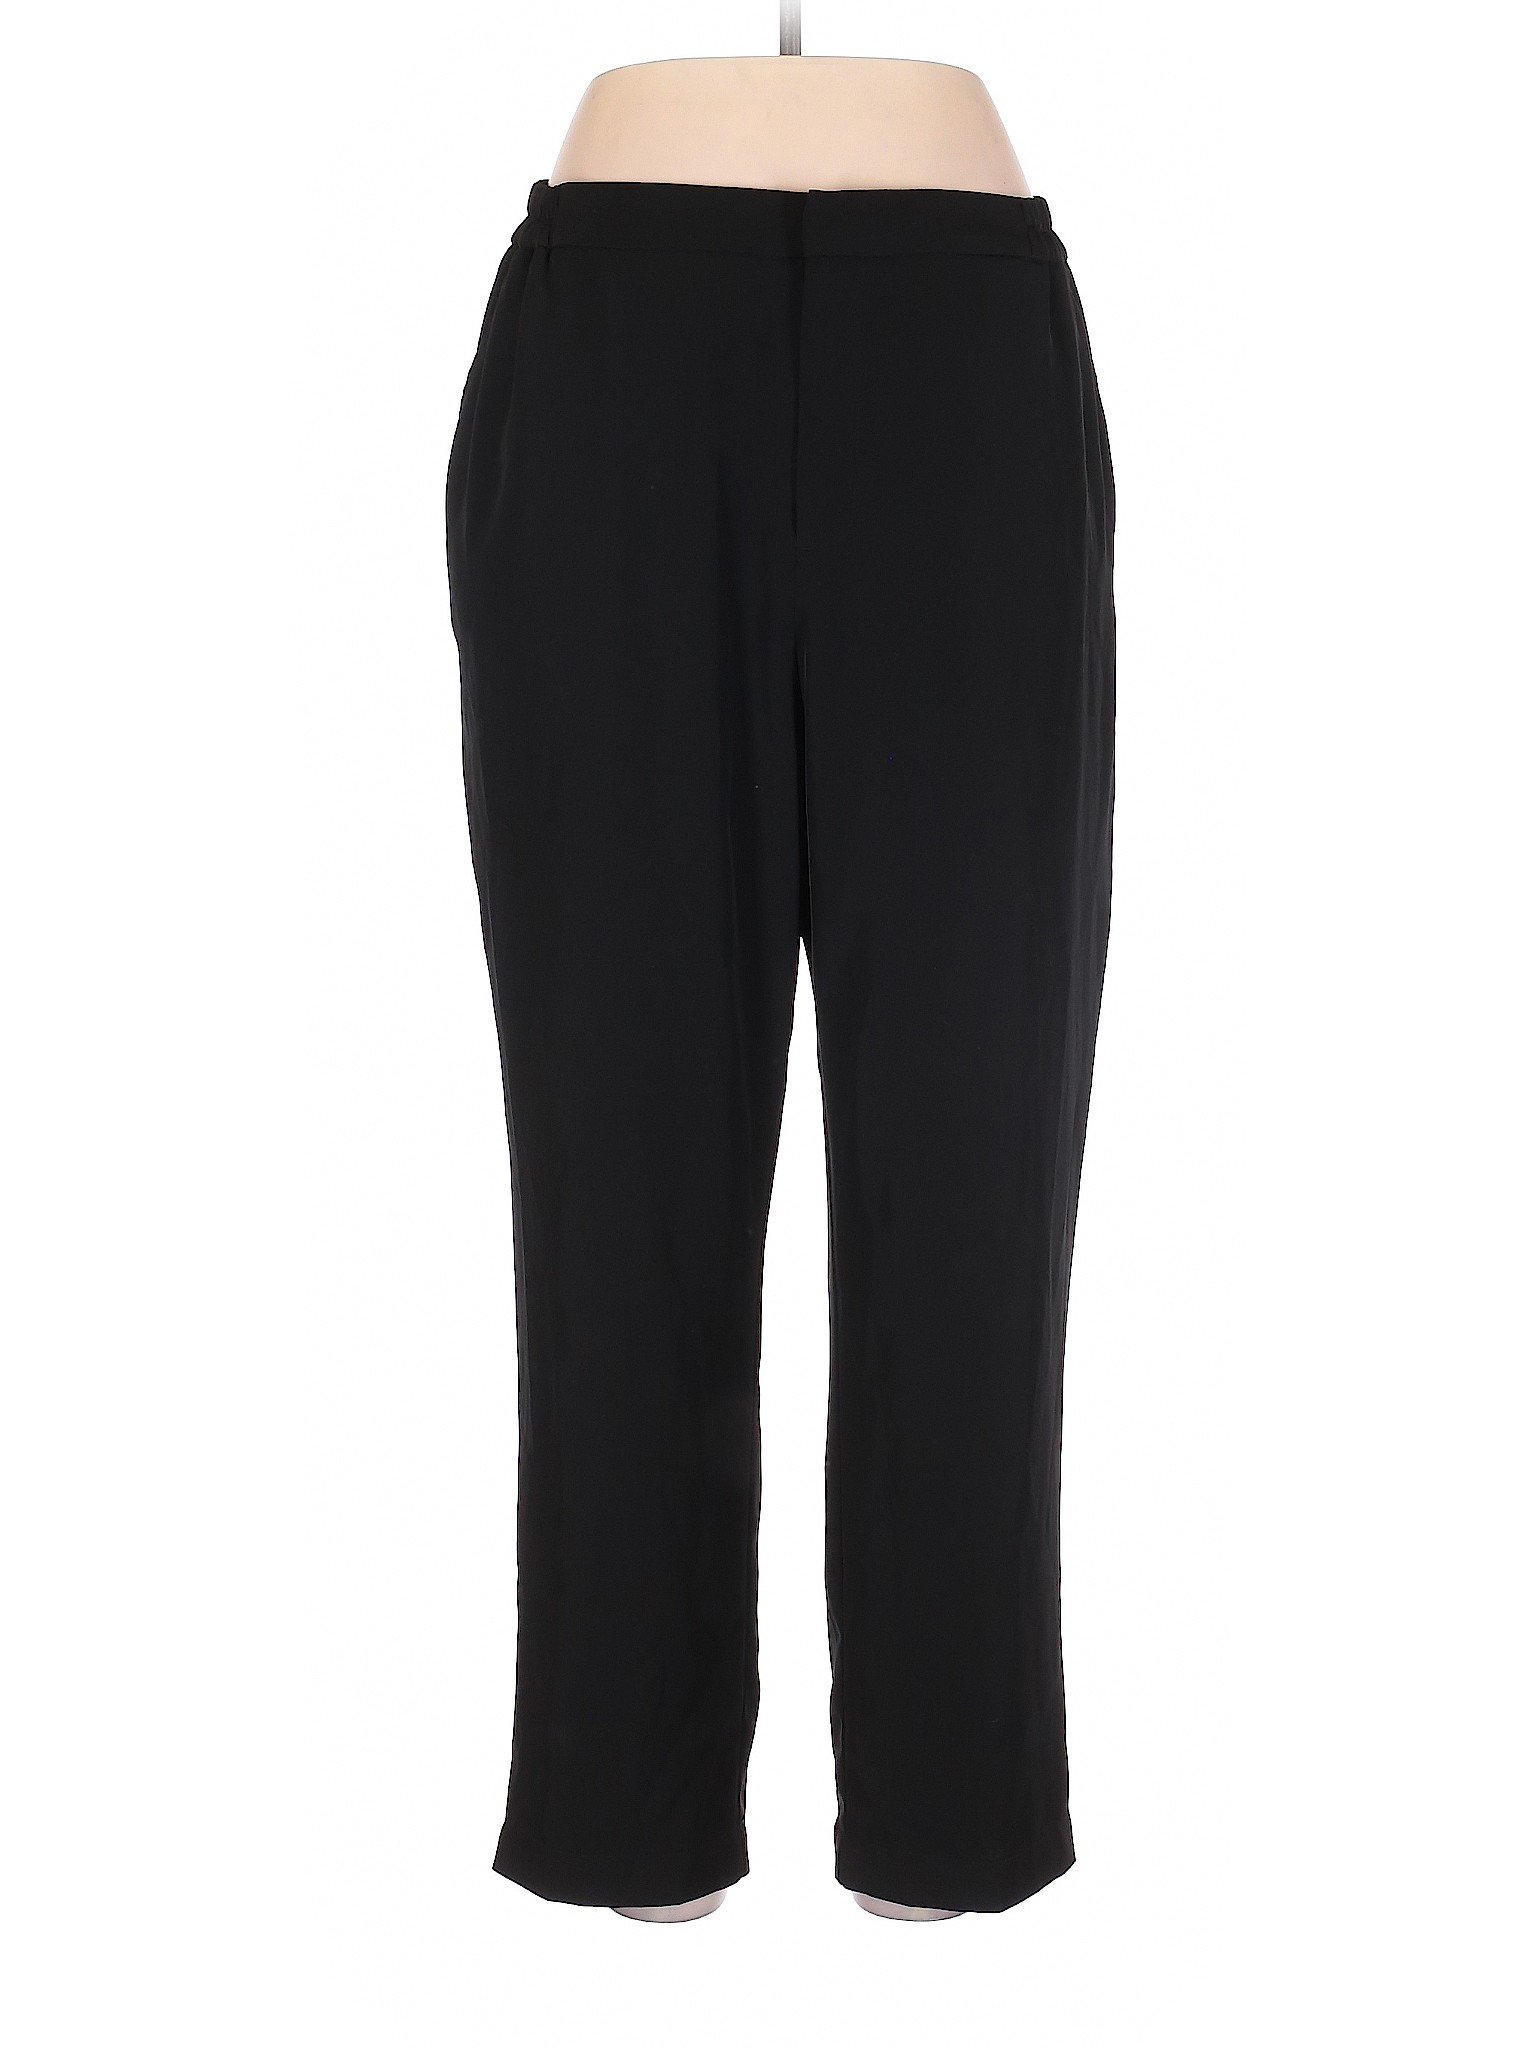 A New Day Women Black Casual Pants L | eBay